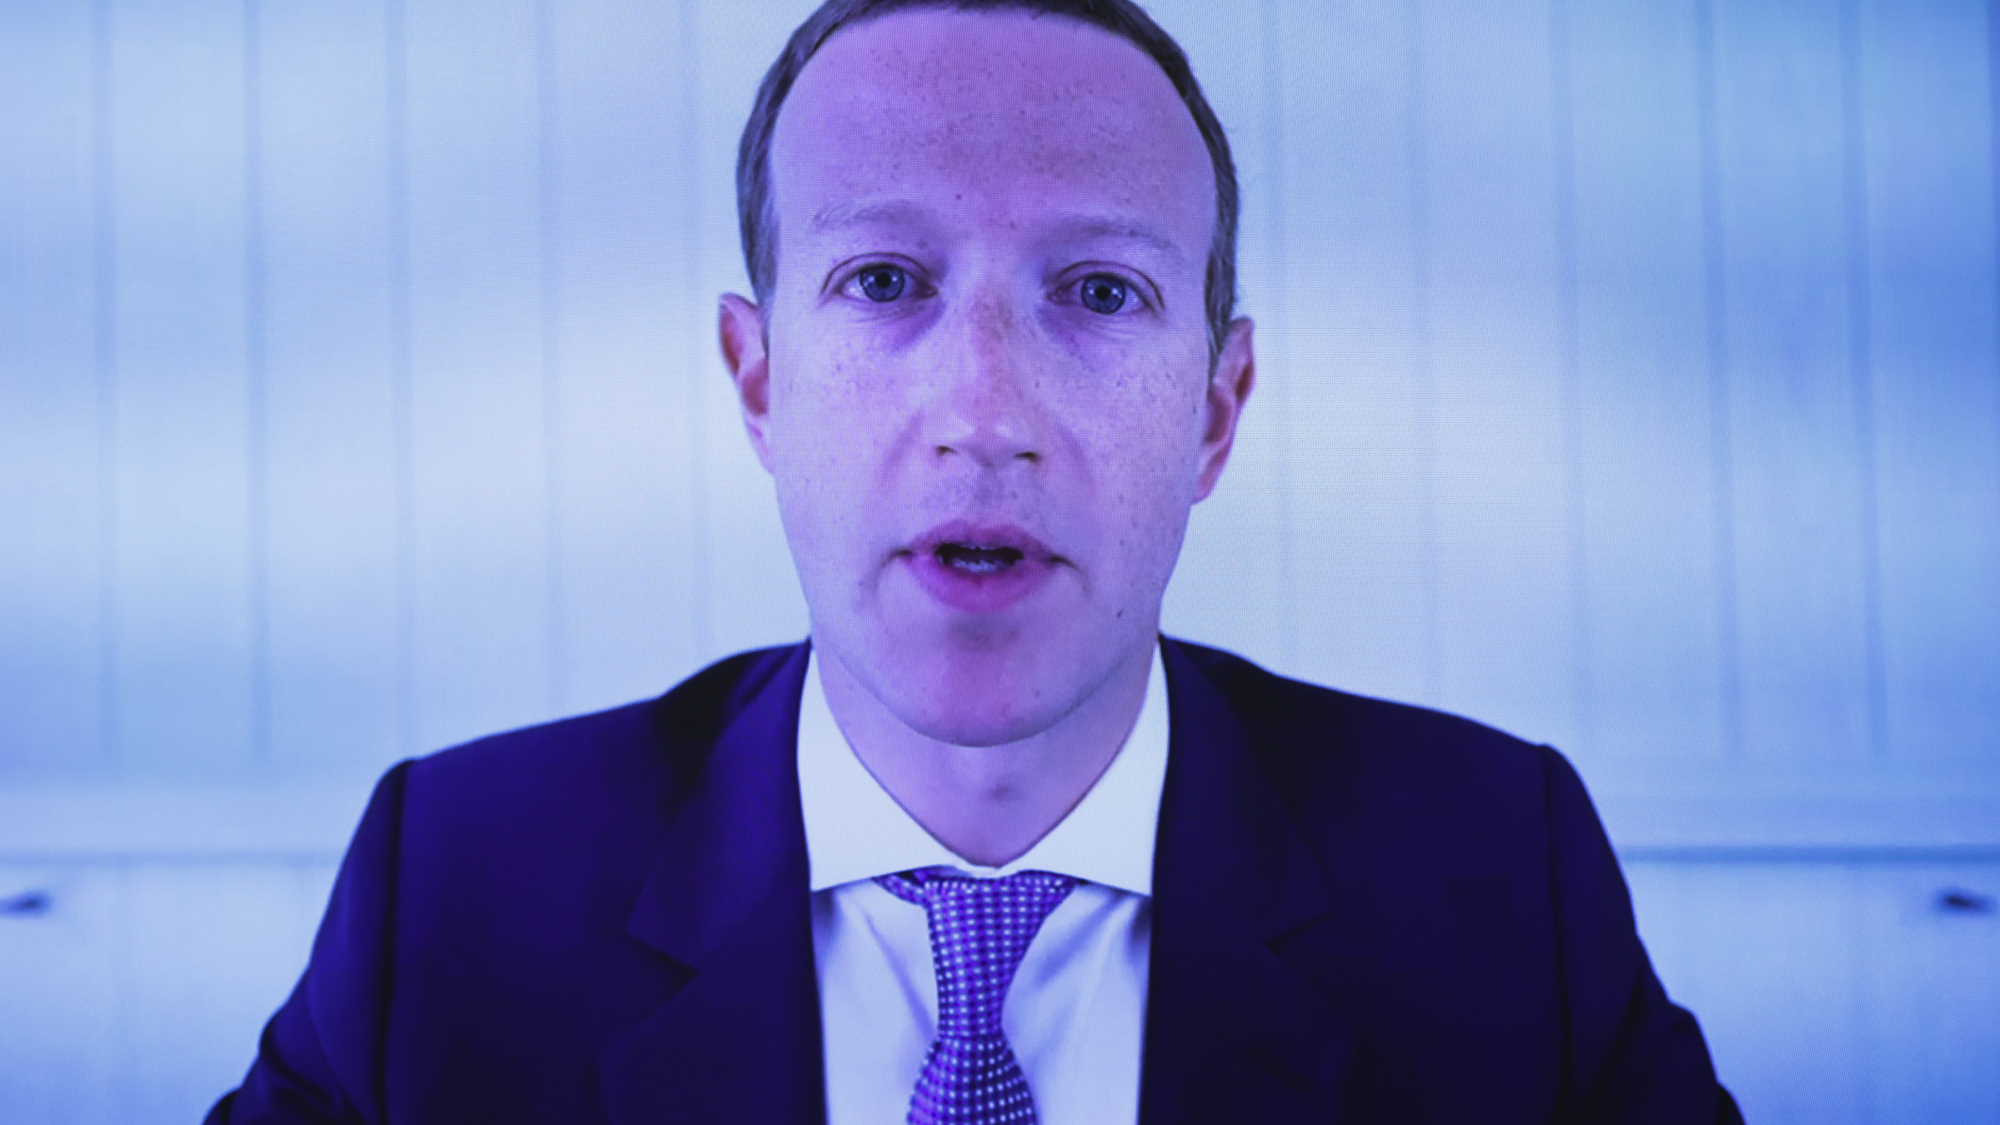 Mark Zuckerburg s'adressant à la caméra, bleui